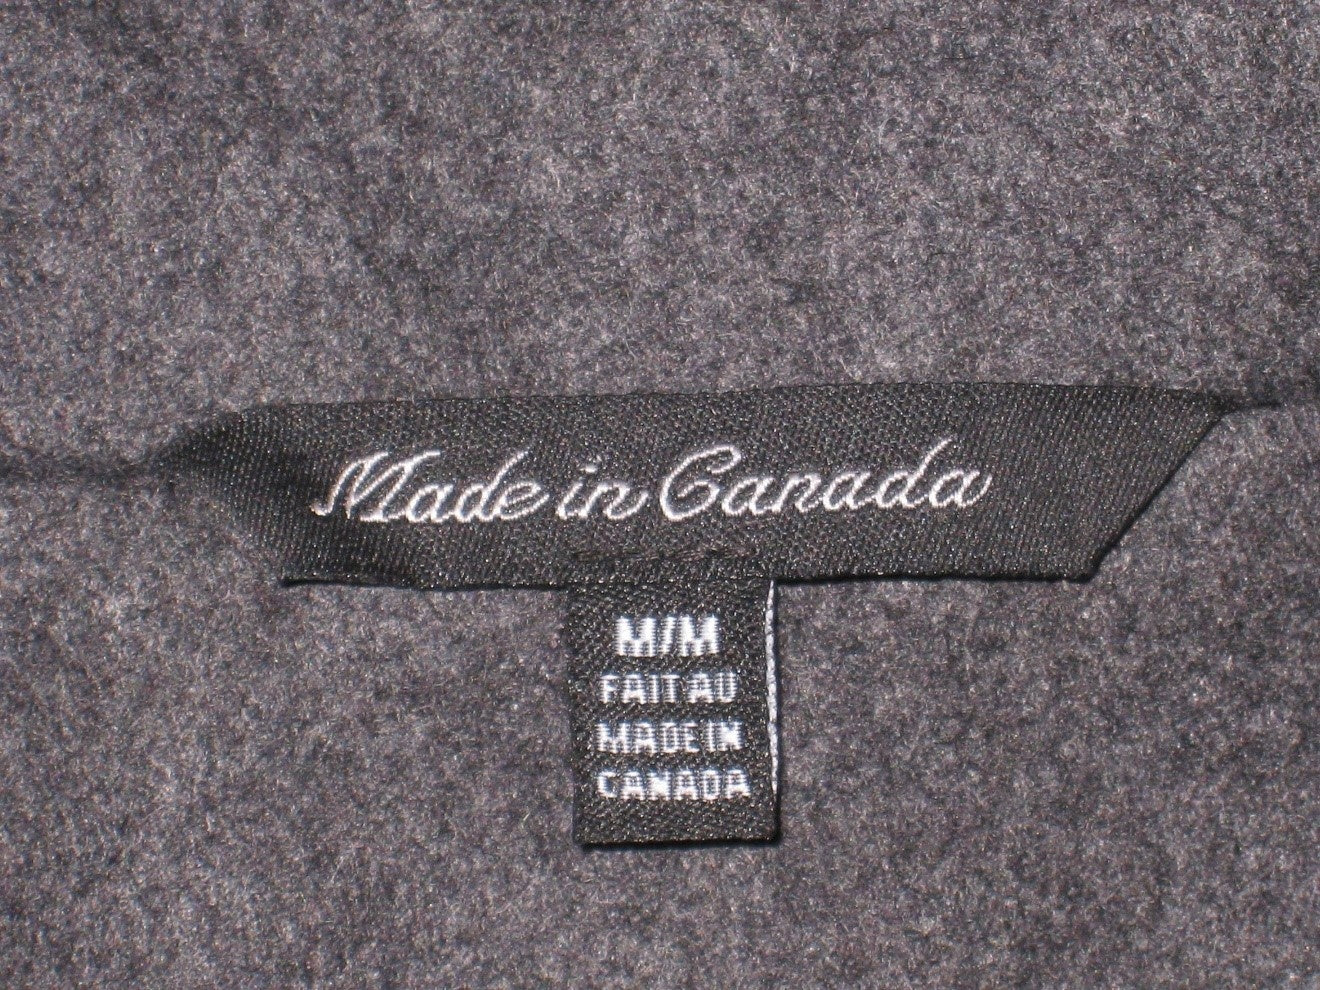 L’influence du pays d’origine et la perception du « made in Canada »